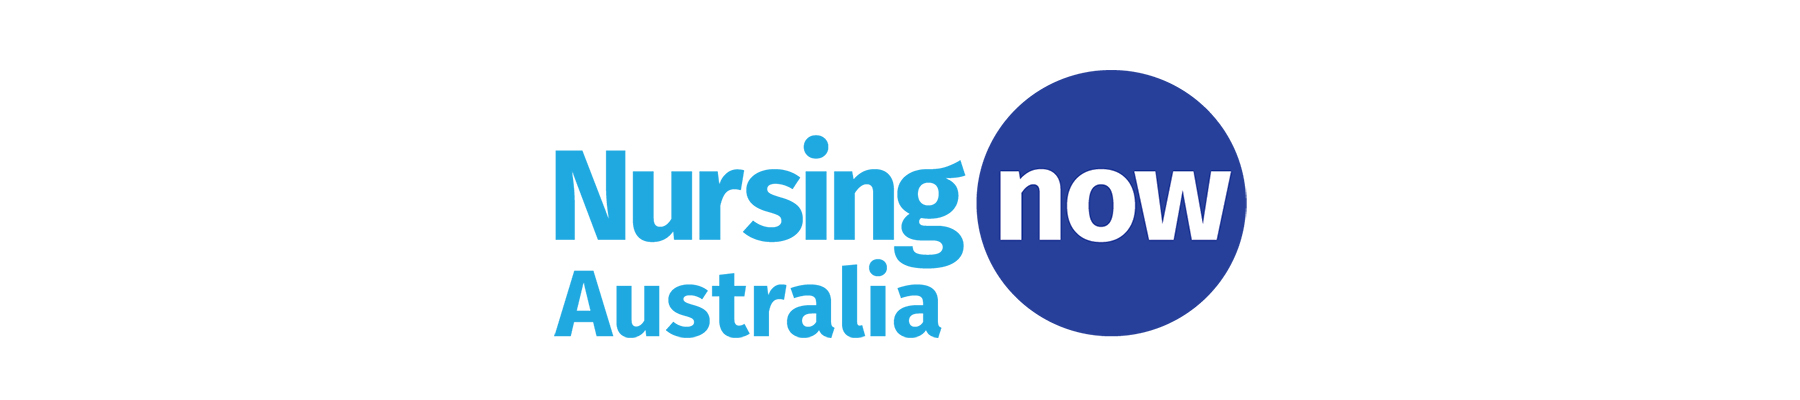 Nursing Now banner